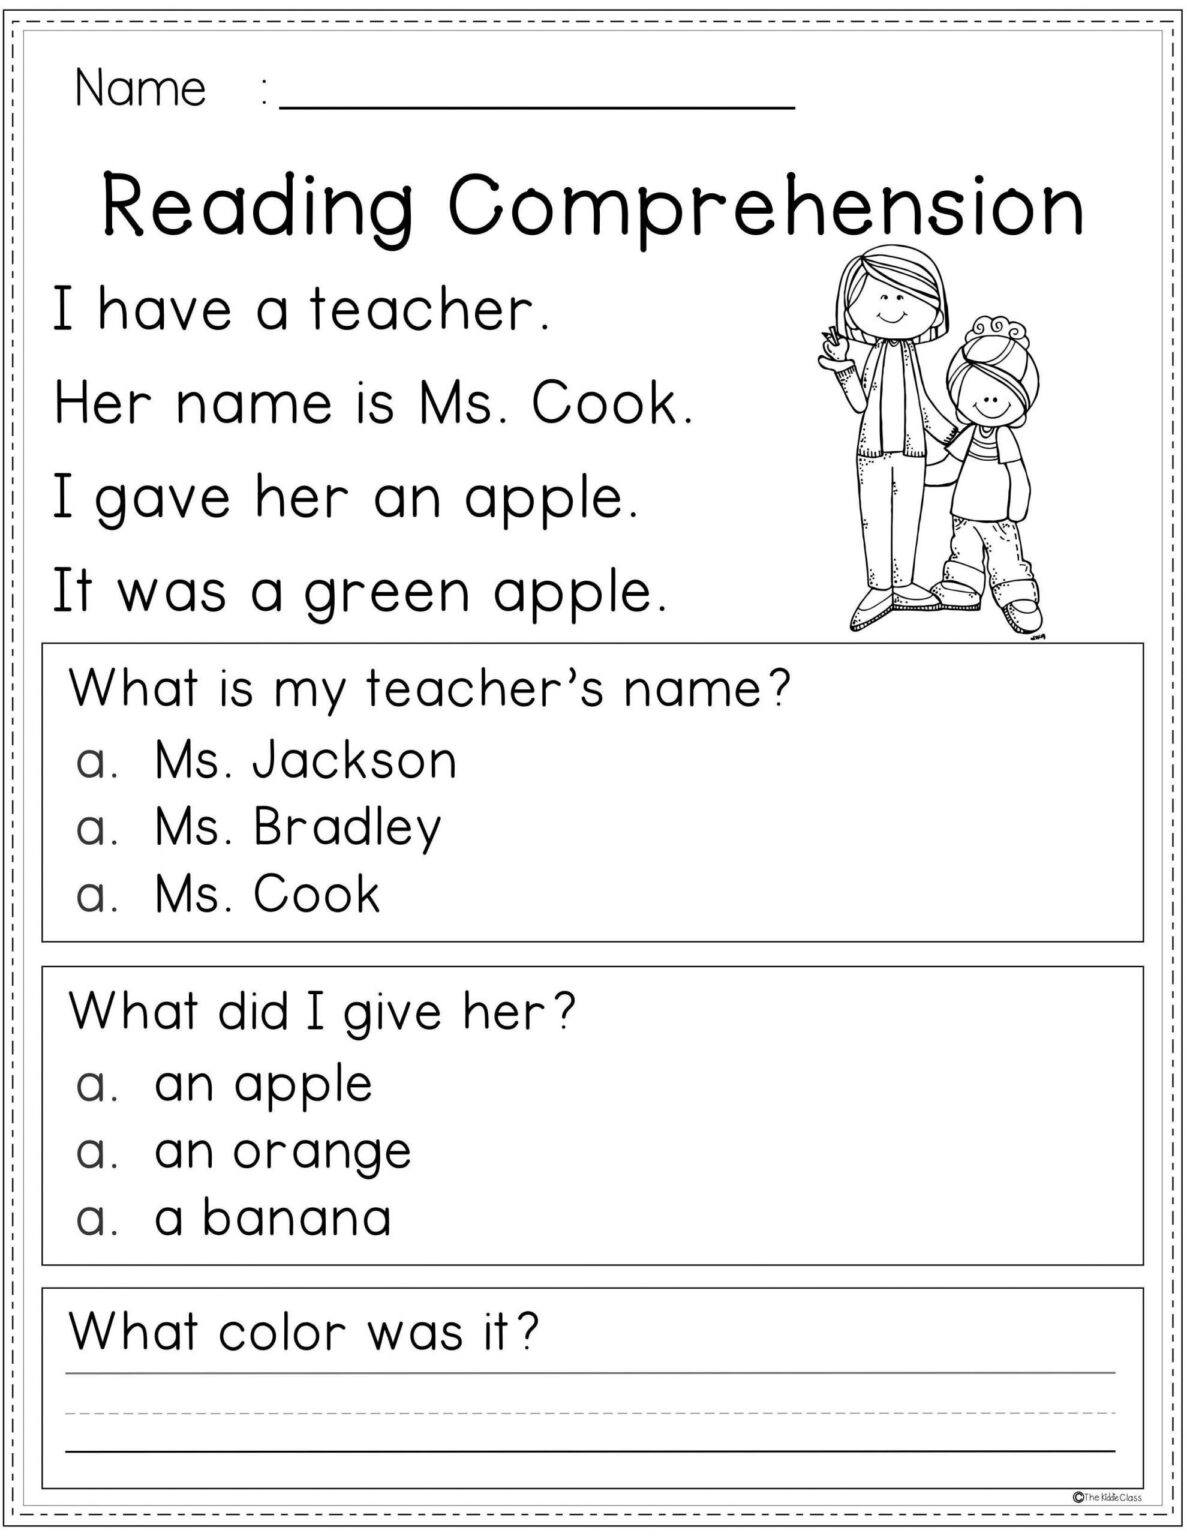 reading-comprehension-worksheets-printable-for-adults-ronald-worksheets